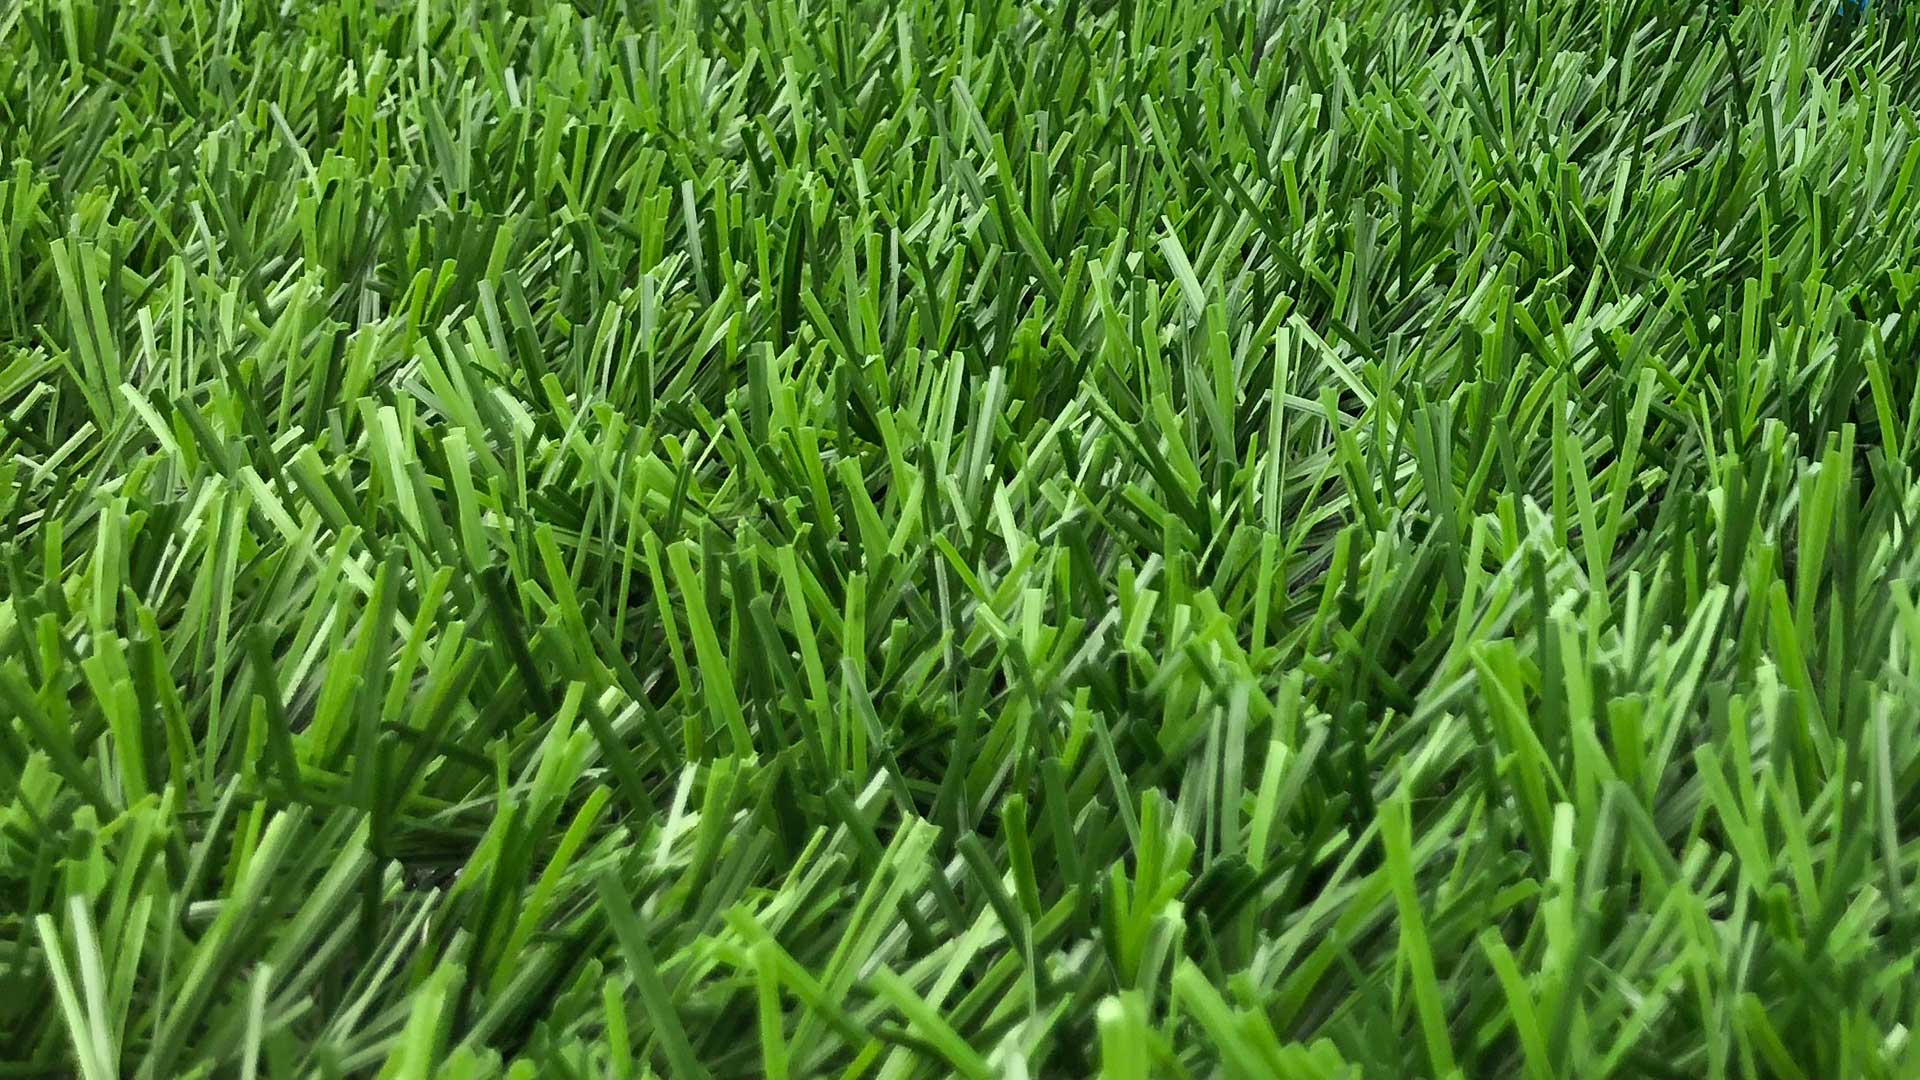 hybridgrass 0